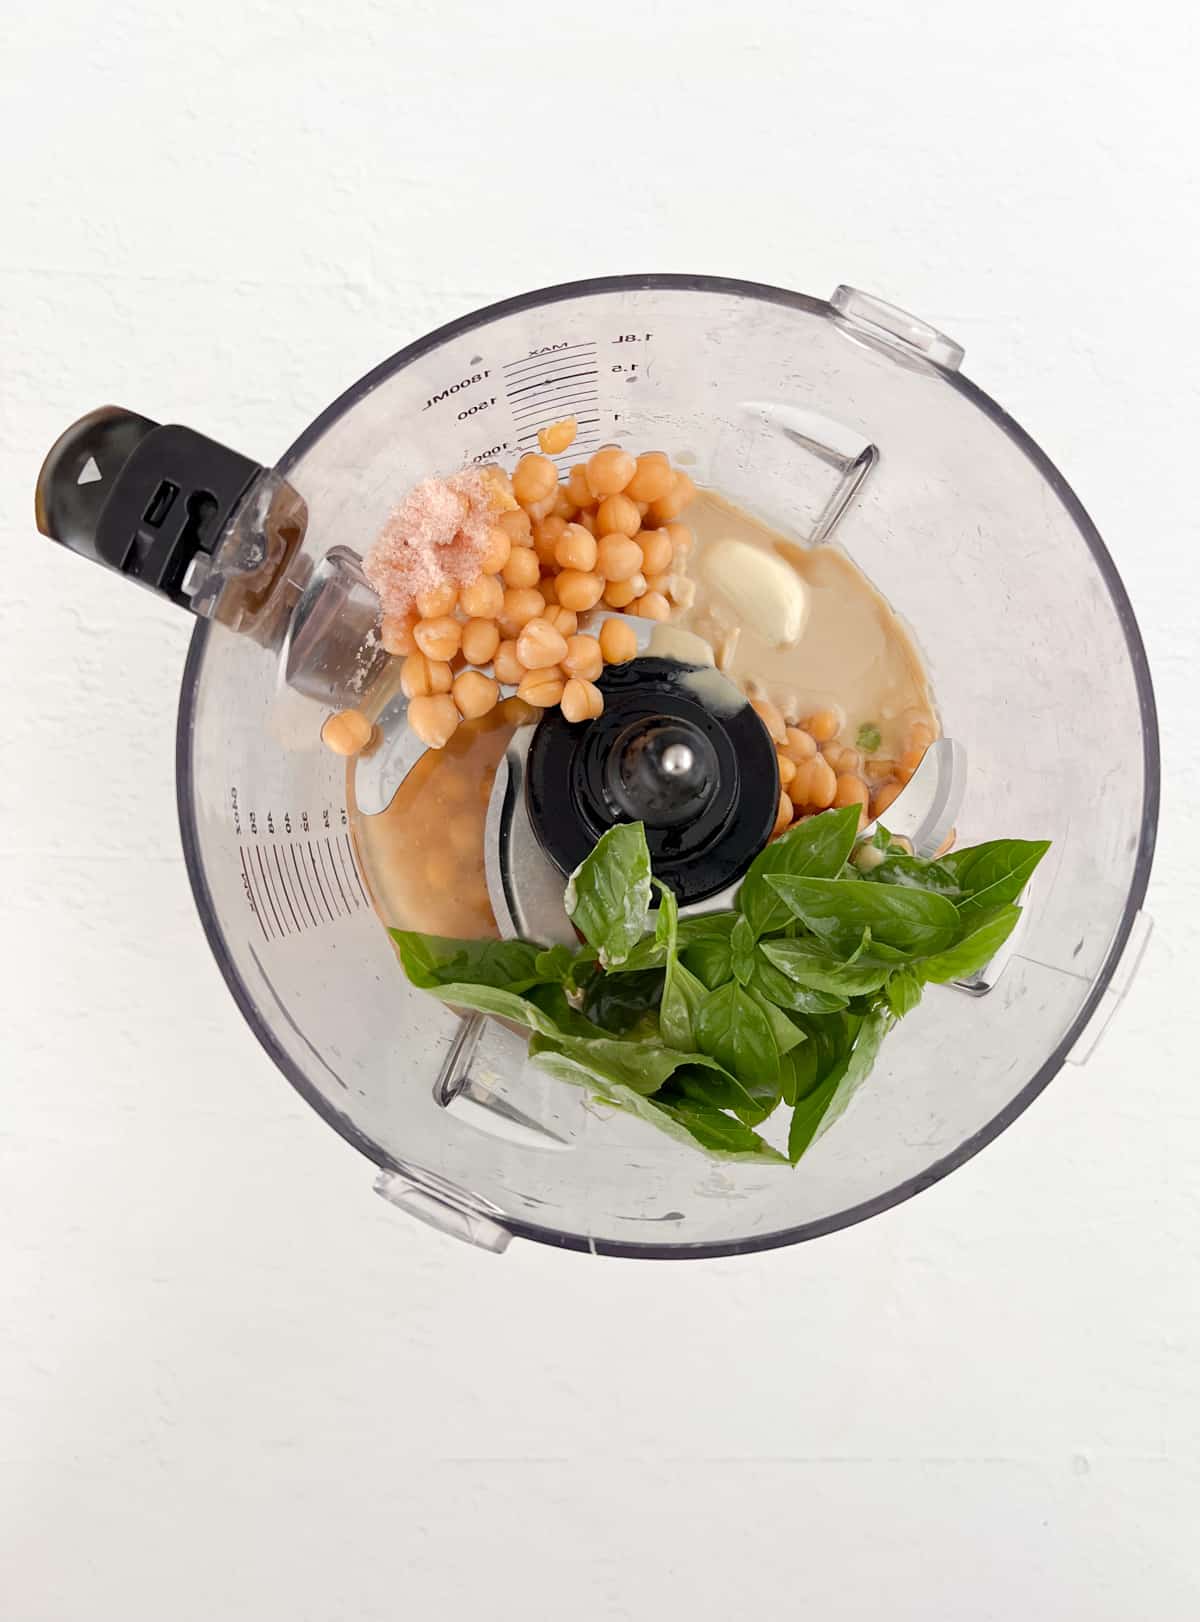 unprocessed basil hummus ingredients in a food processor bowl